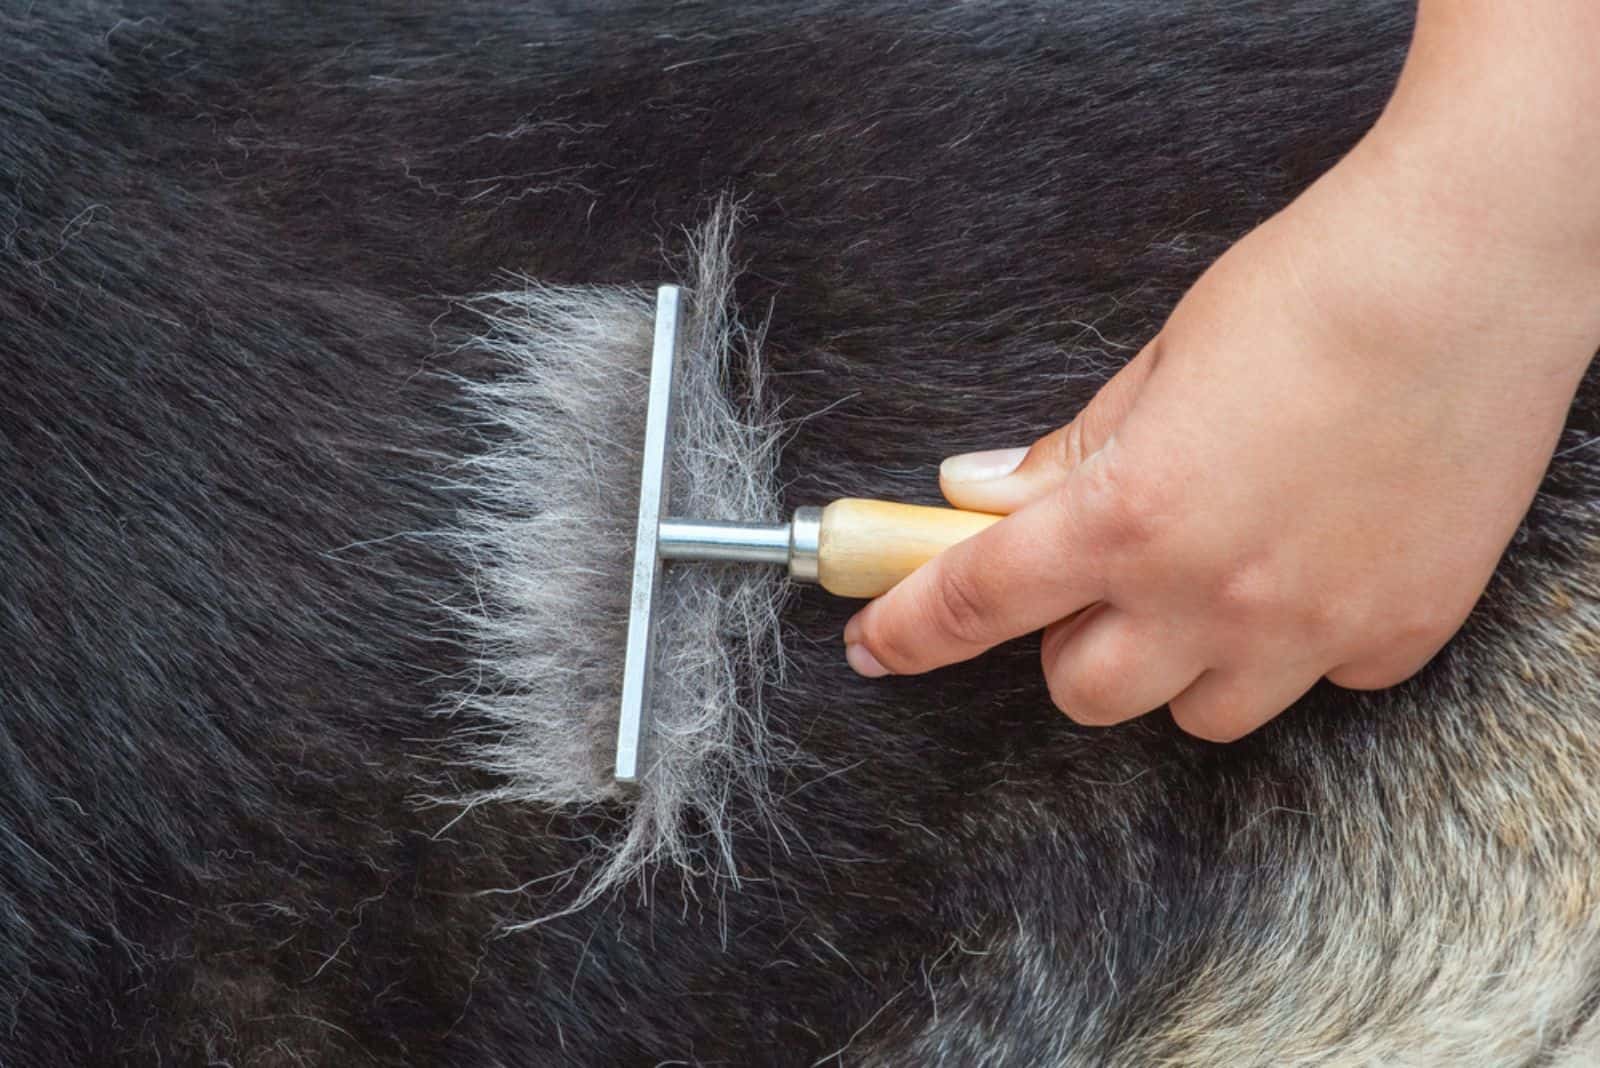 A veterinarian combs a German shepherd dog with a metal comb.